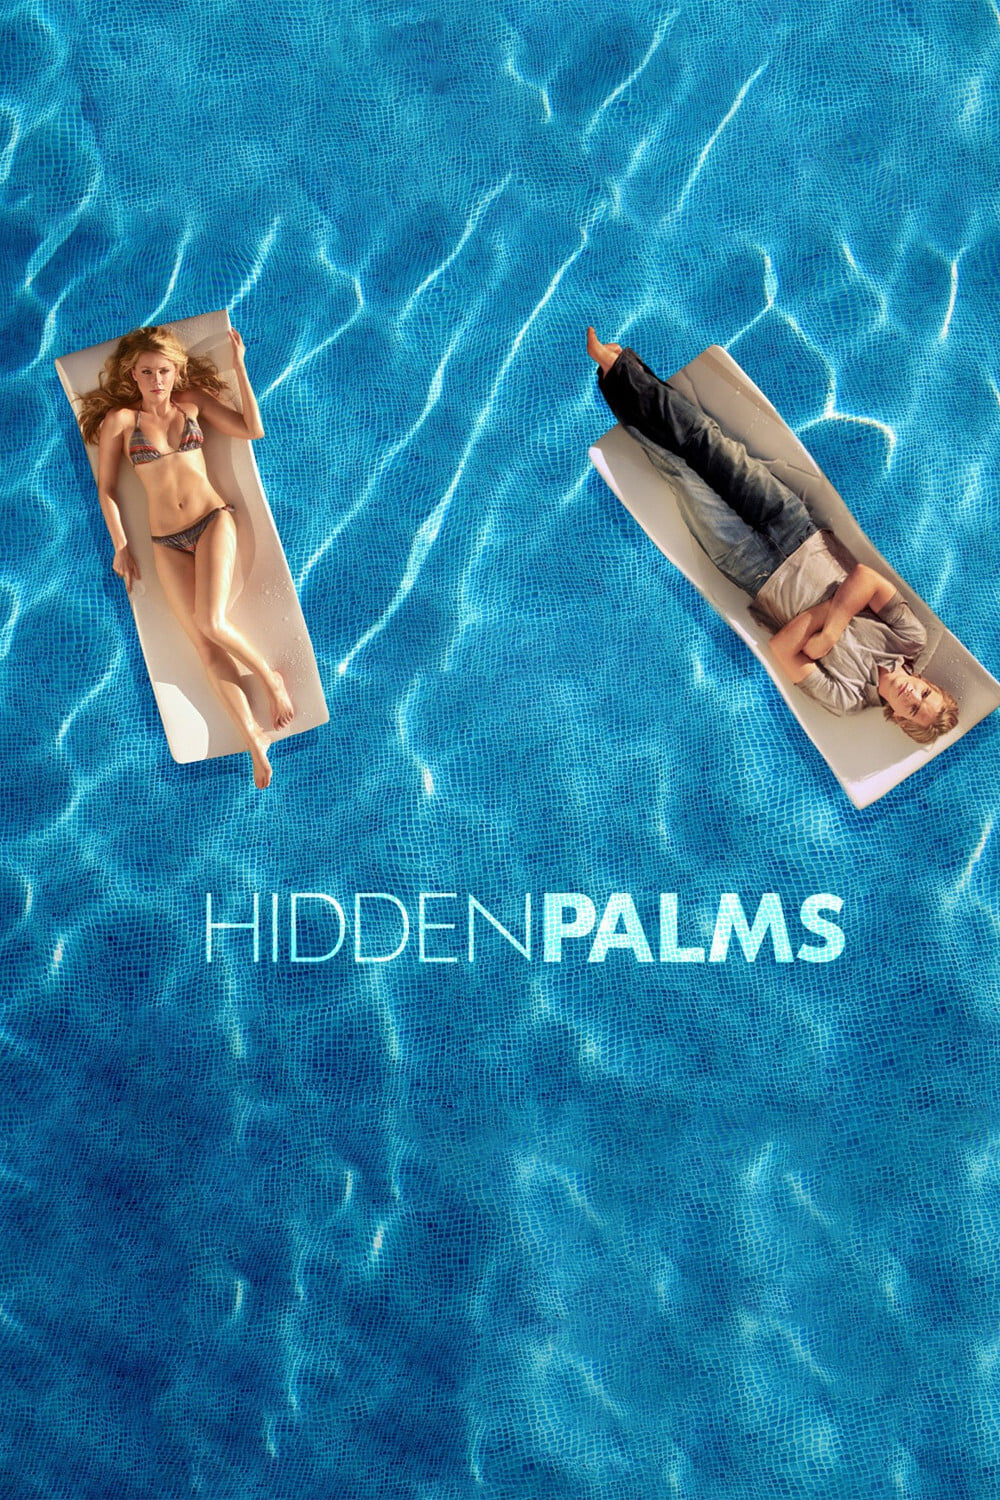 نخل‌های پنهان (Hidden Palms)